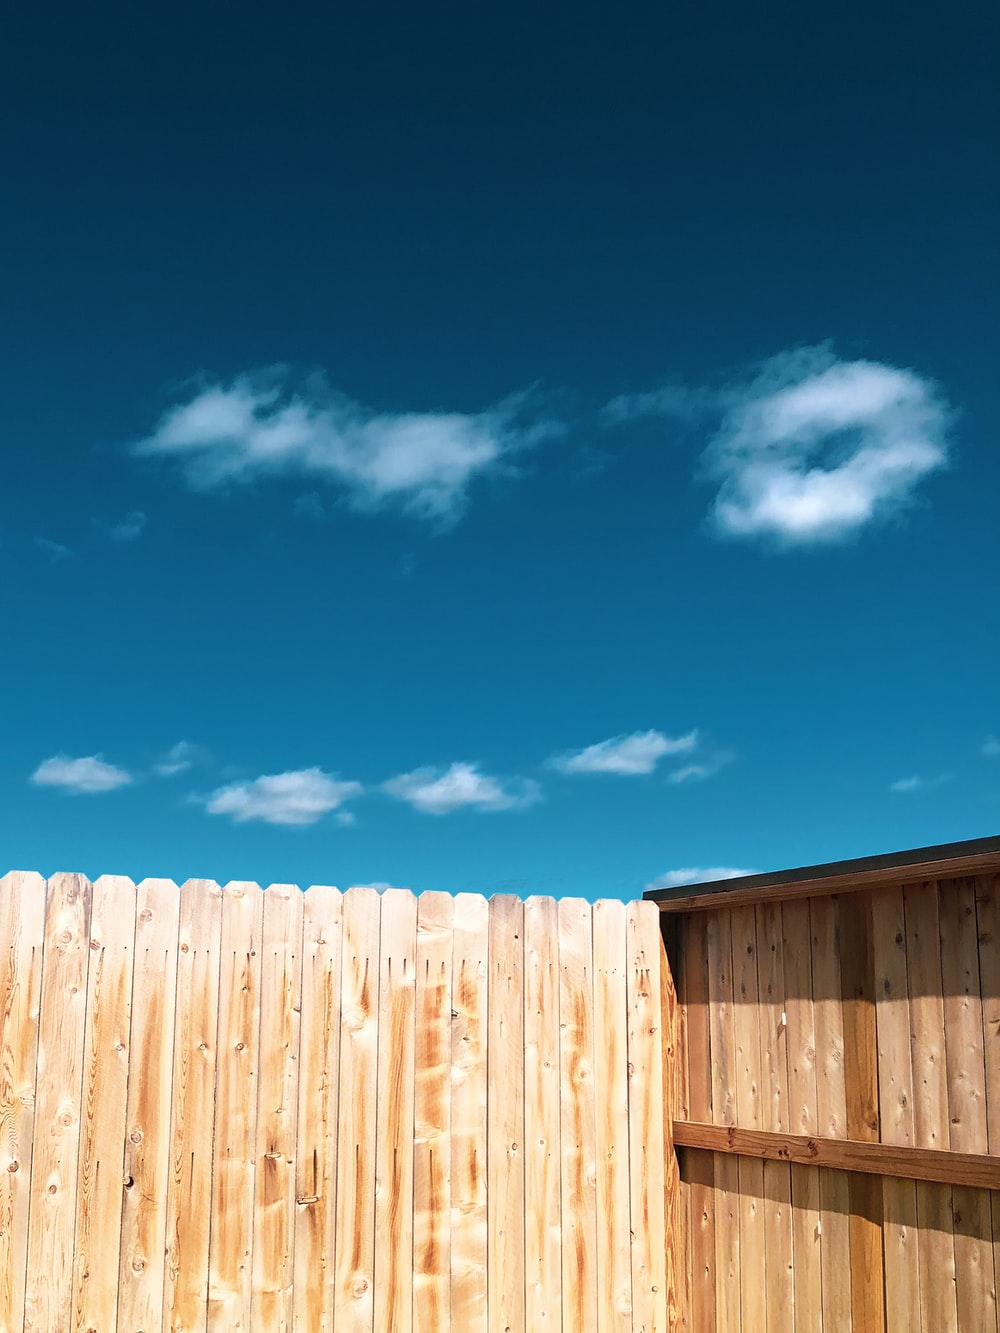 brown wooden fence under blue sky during daytime